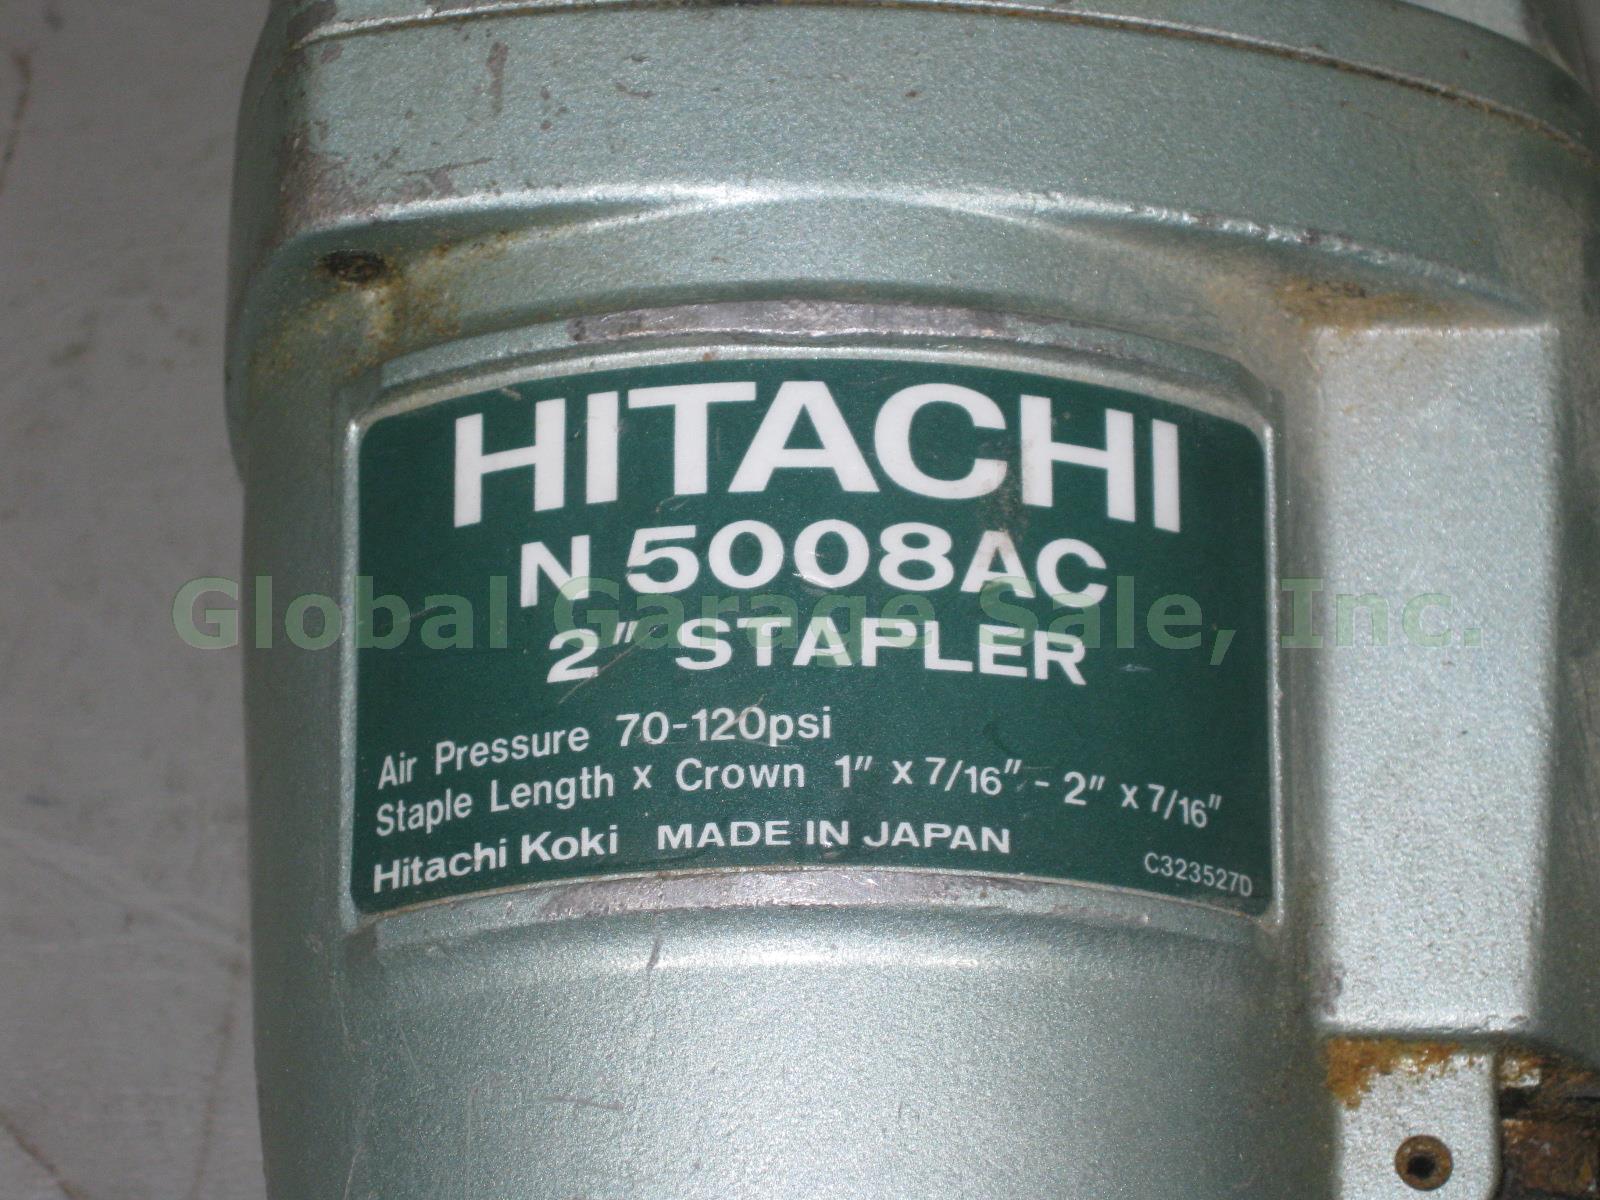 Hitachi N5008AC Construction Stapler Standard 16 Gauge Crown 1" x 7/16" - 2" NR! 2